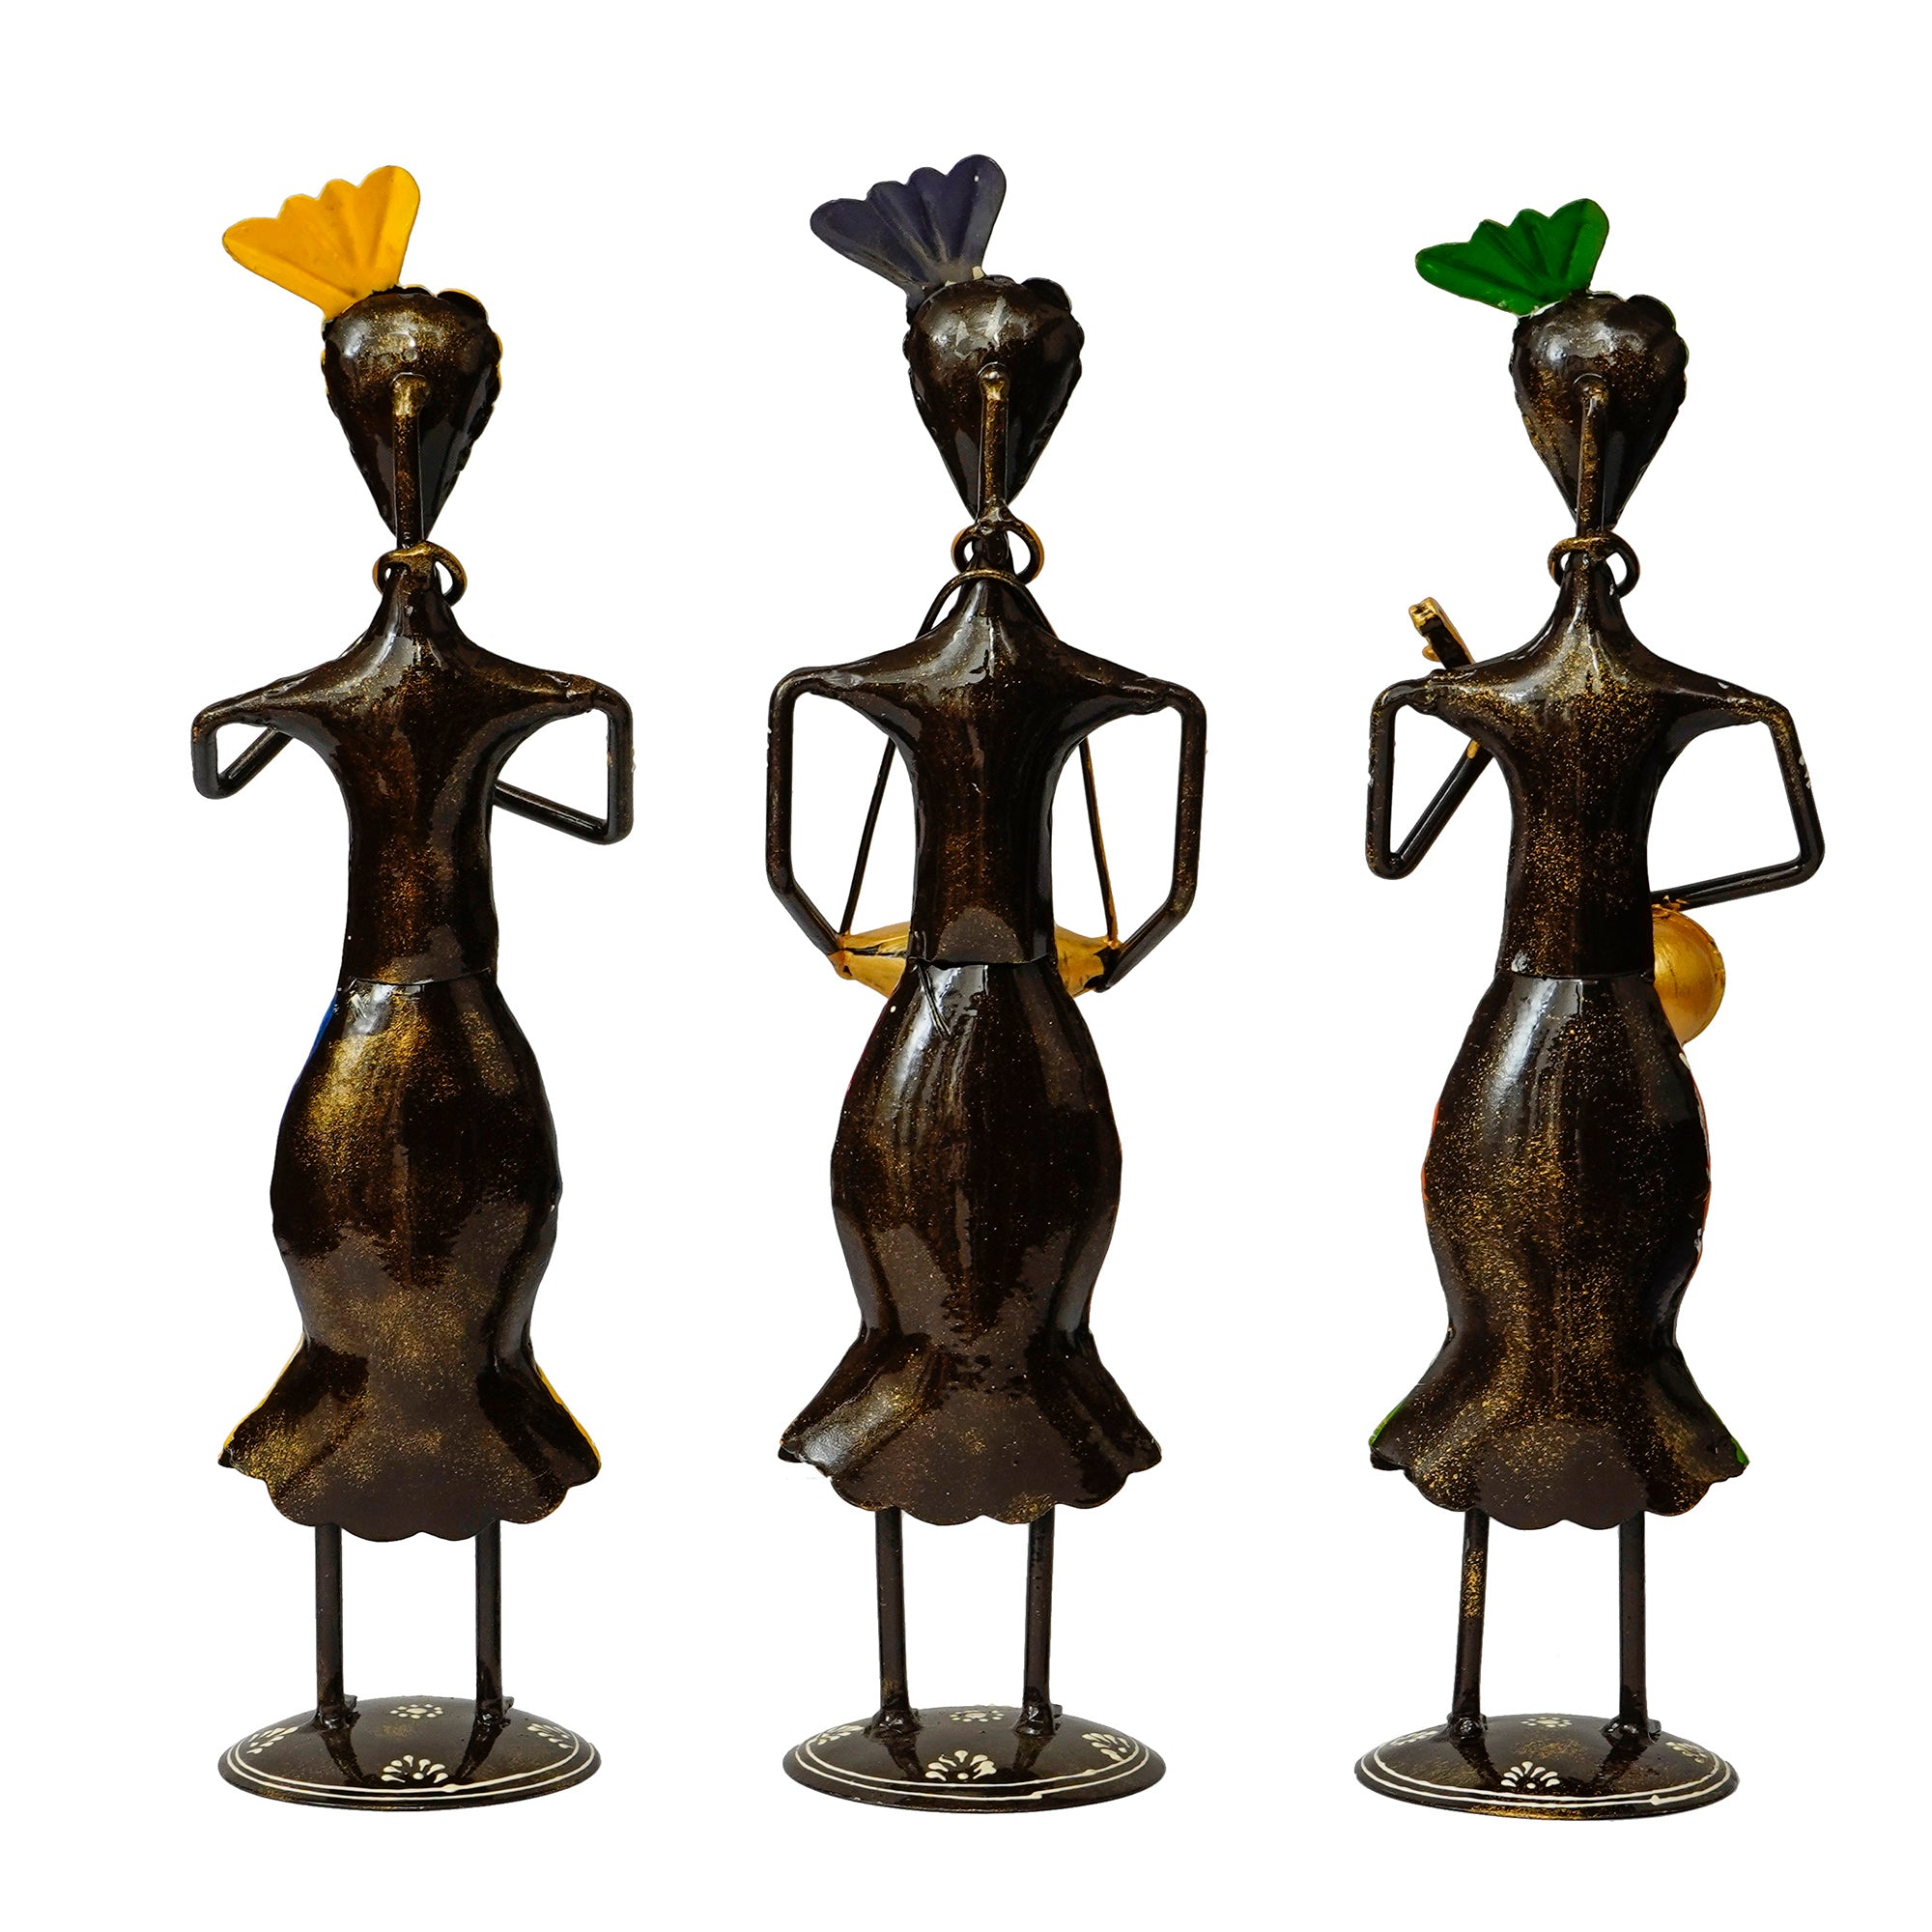 Iron Set of 3 Tribal Man Figurines Playing Banjo, Dholak, Trumpet Musical Instruments Decorative Showpiece 5